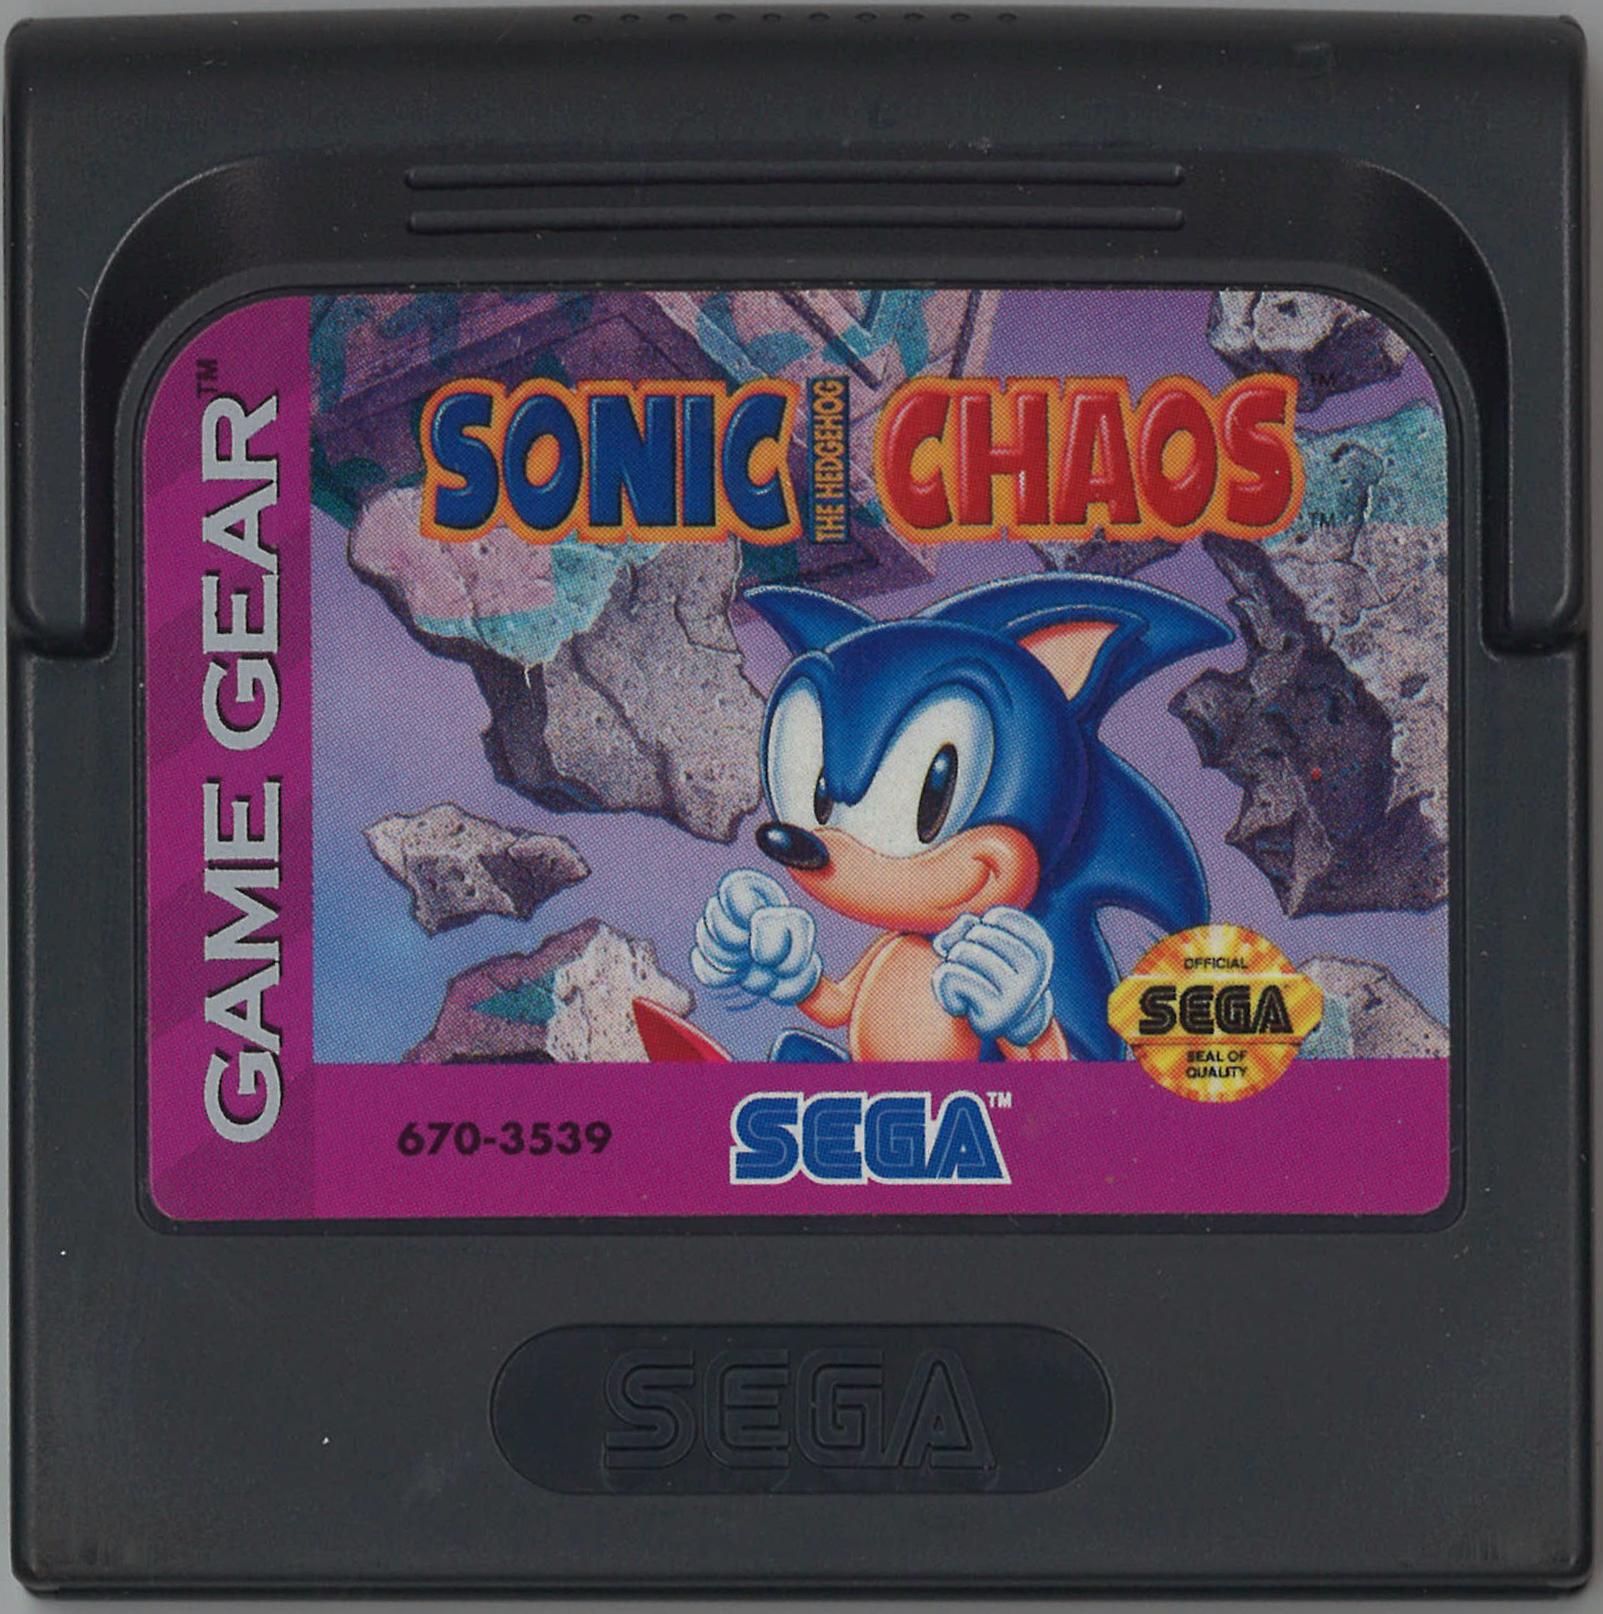 Sonic CD Sega картридж. Игра Sonic the Hedgehog 2 / Sega game Gear. Game Gear Cartridge. Sonic Chaos game. Sonic gear